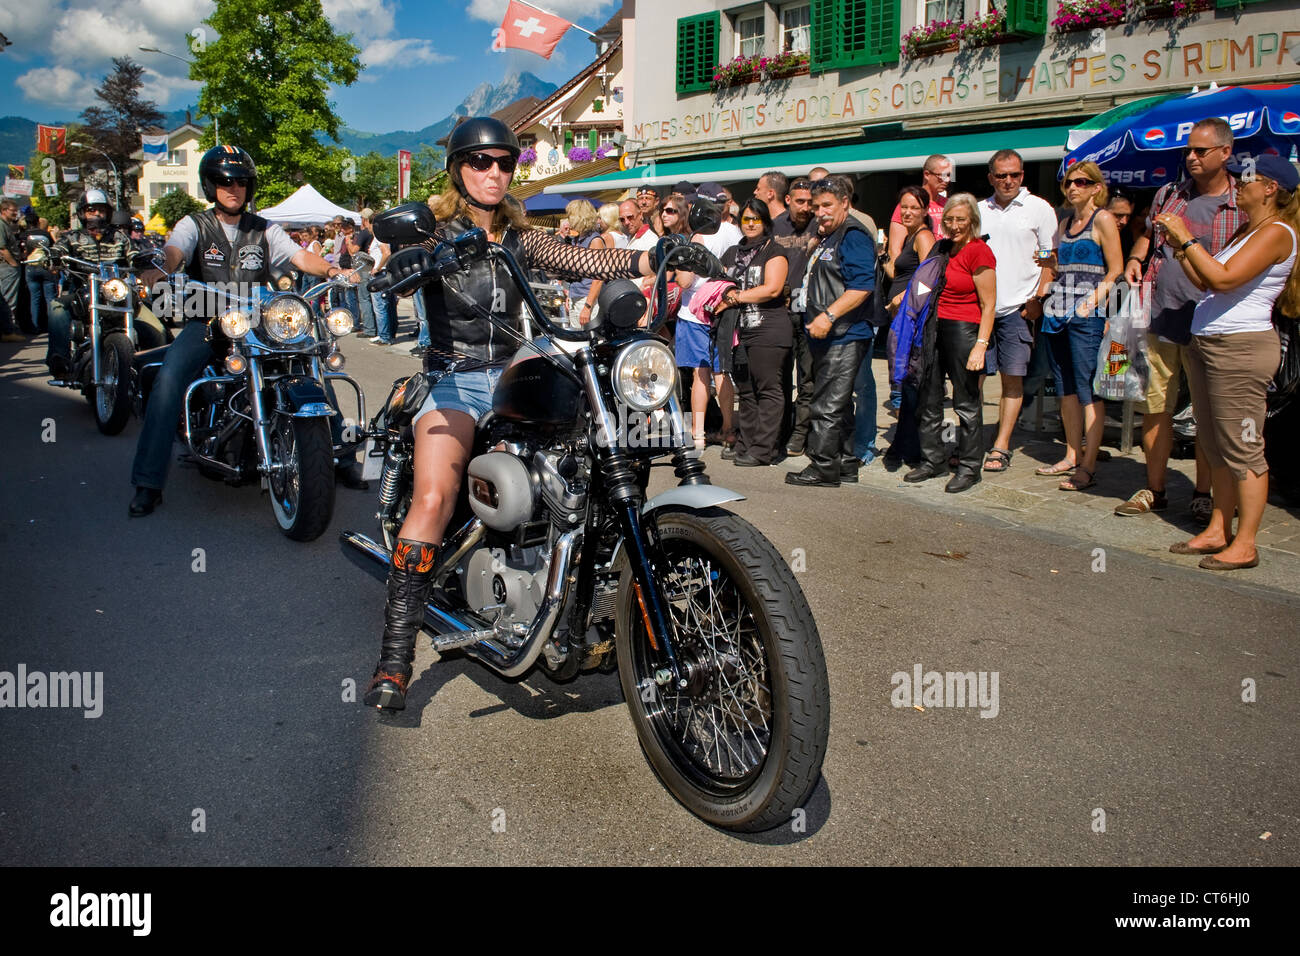 Switzerland, Brunnen, Harley Davidson festival Stock Photo - Alamy